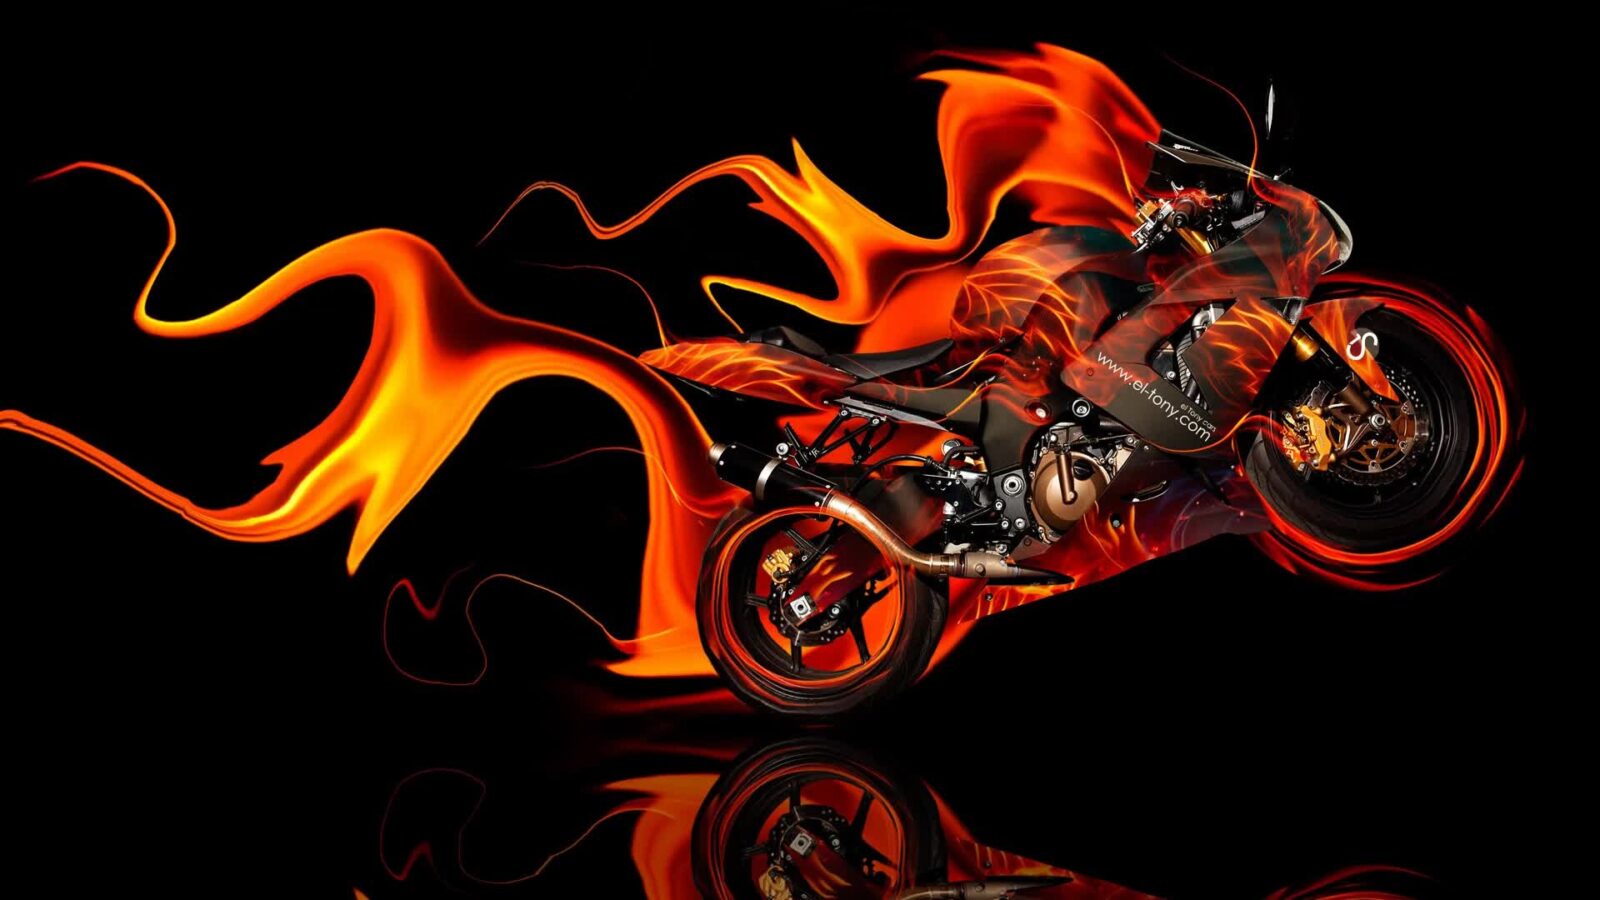 LiveWallpapers4Free.com | Moto Kawasaki In Fire Tony Kokhan - Free Live Wallpaper